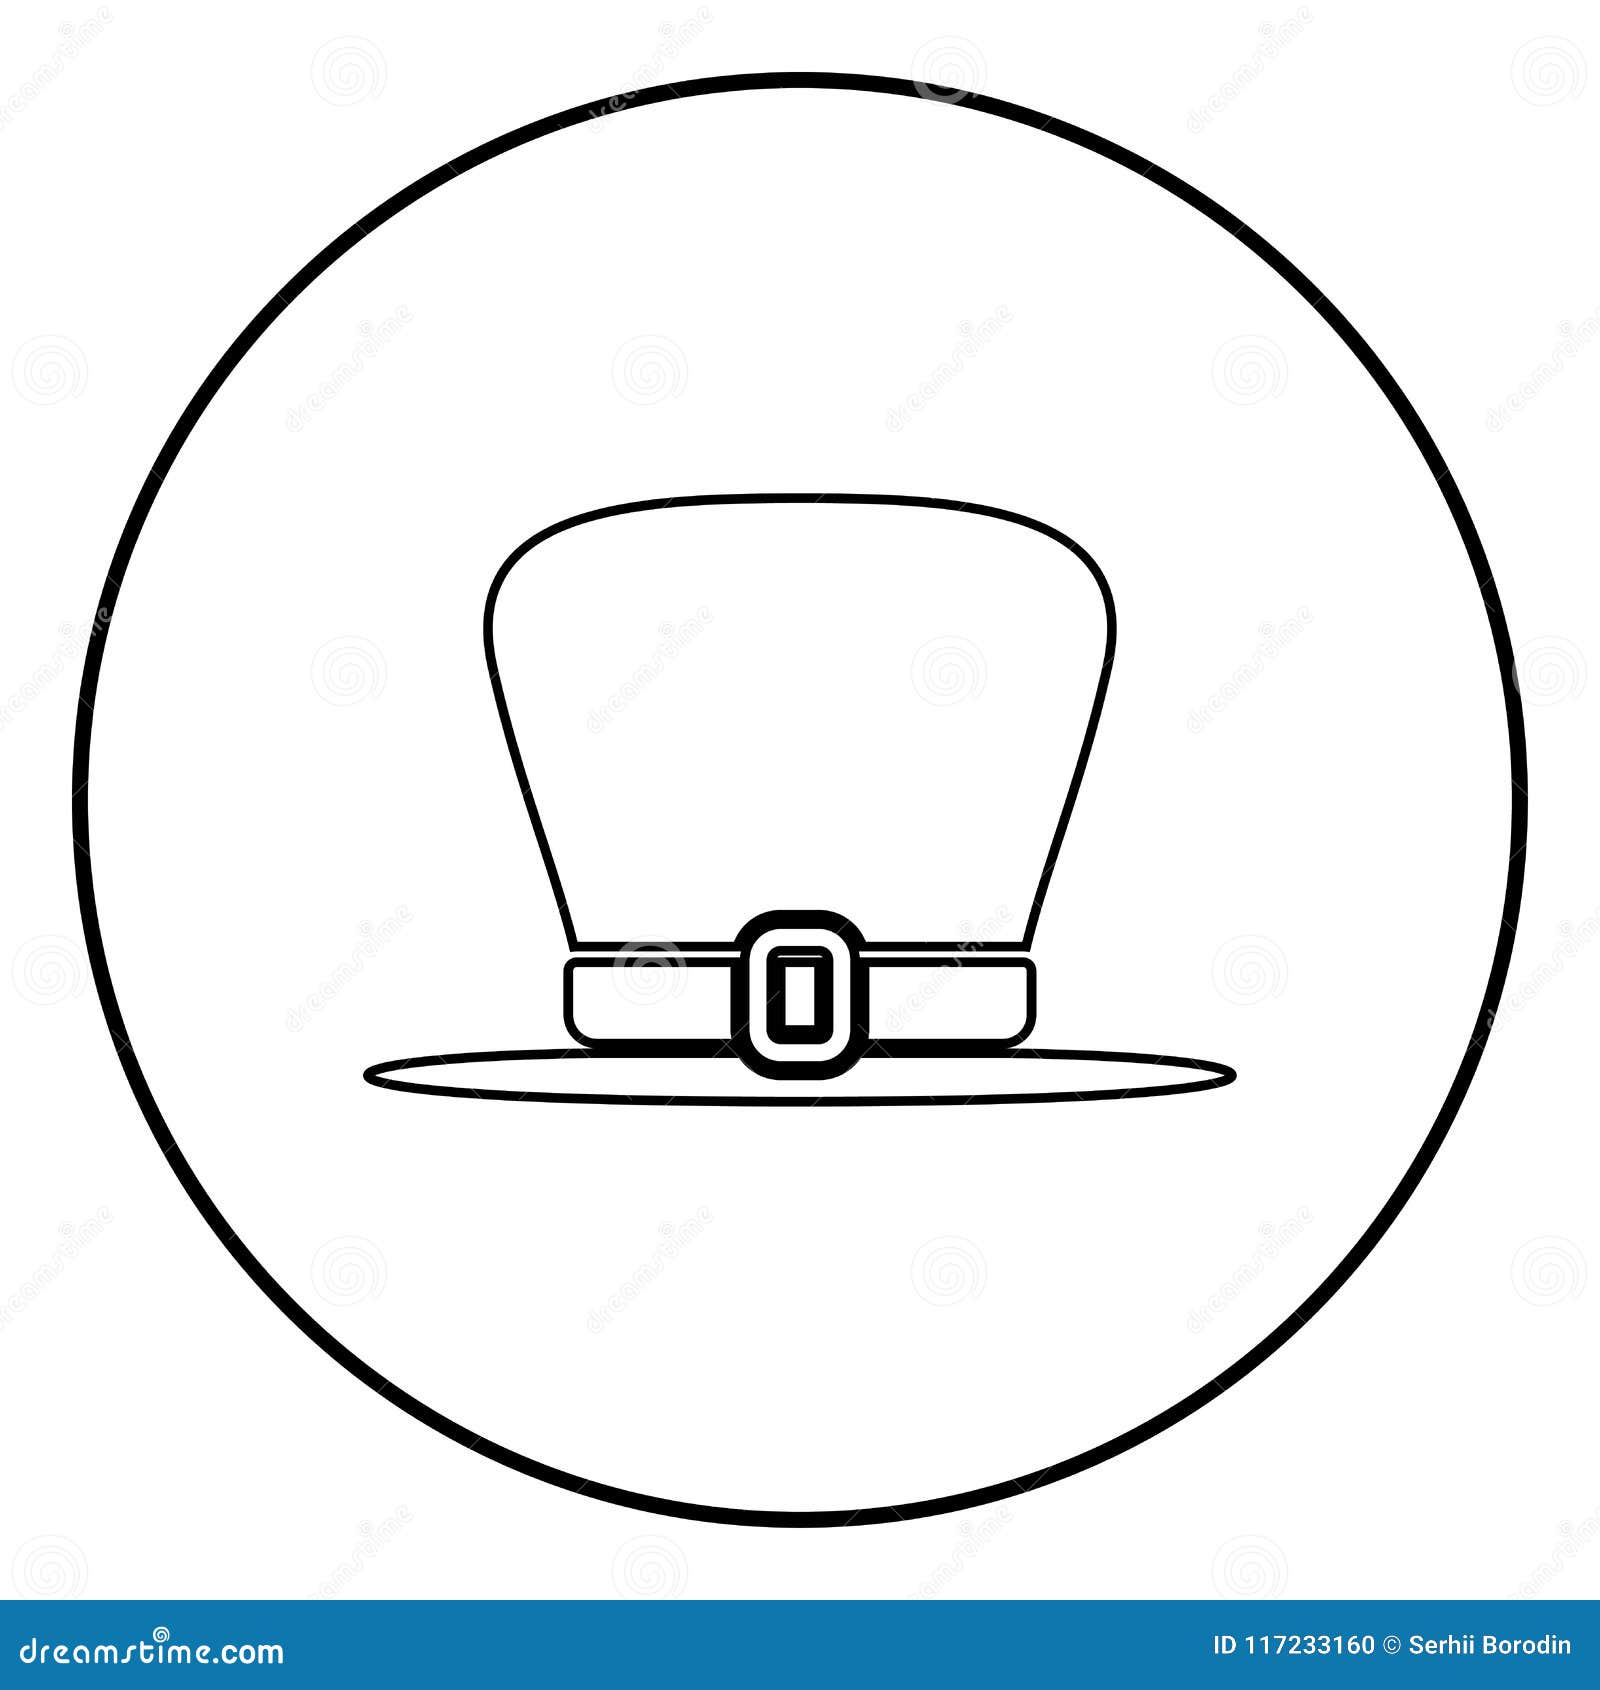 hat-leprechaun-icon-black-color-vector-illustration-simple-image-stock-vector-illustration-of